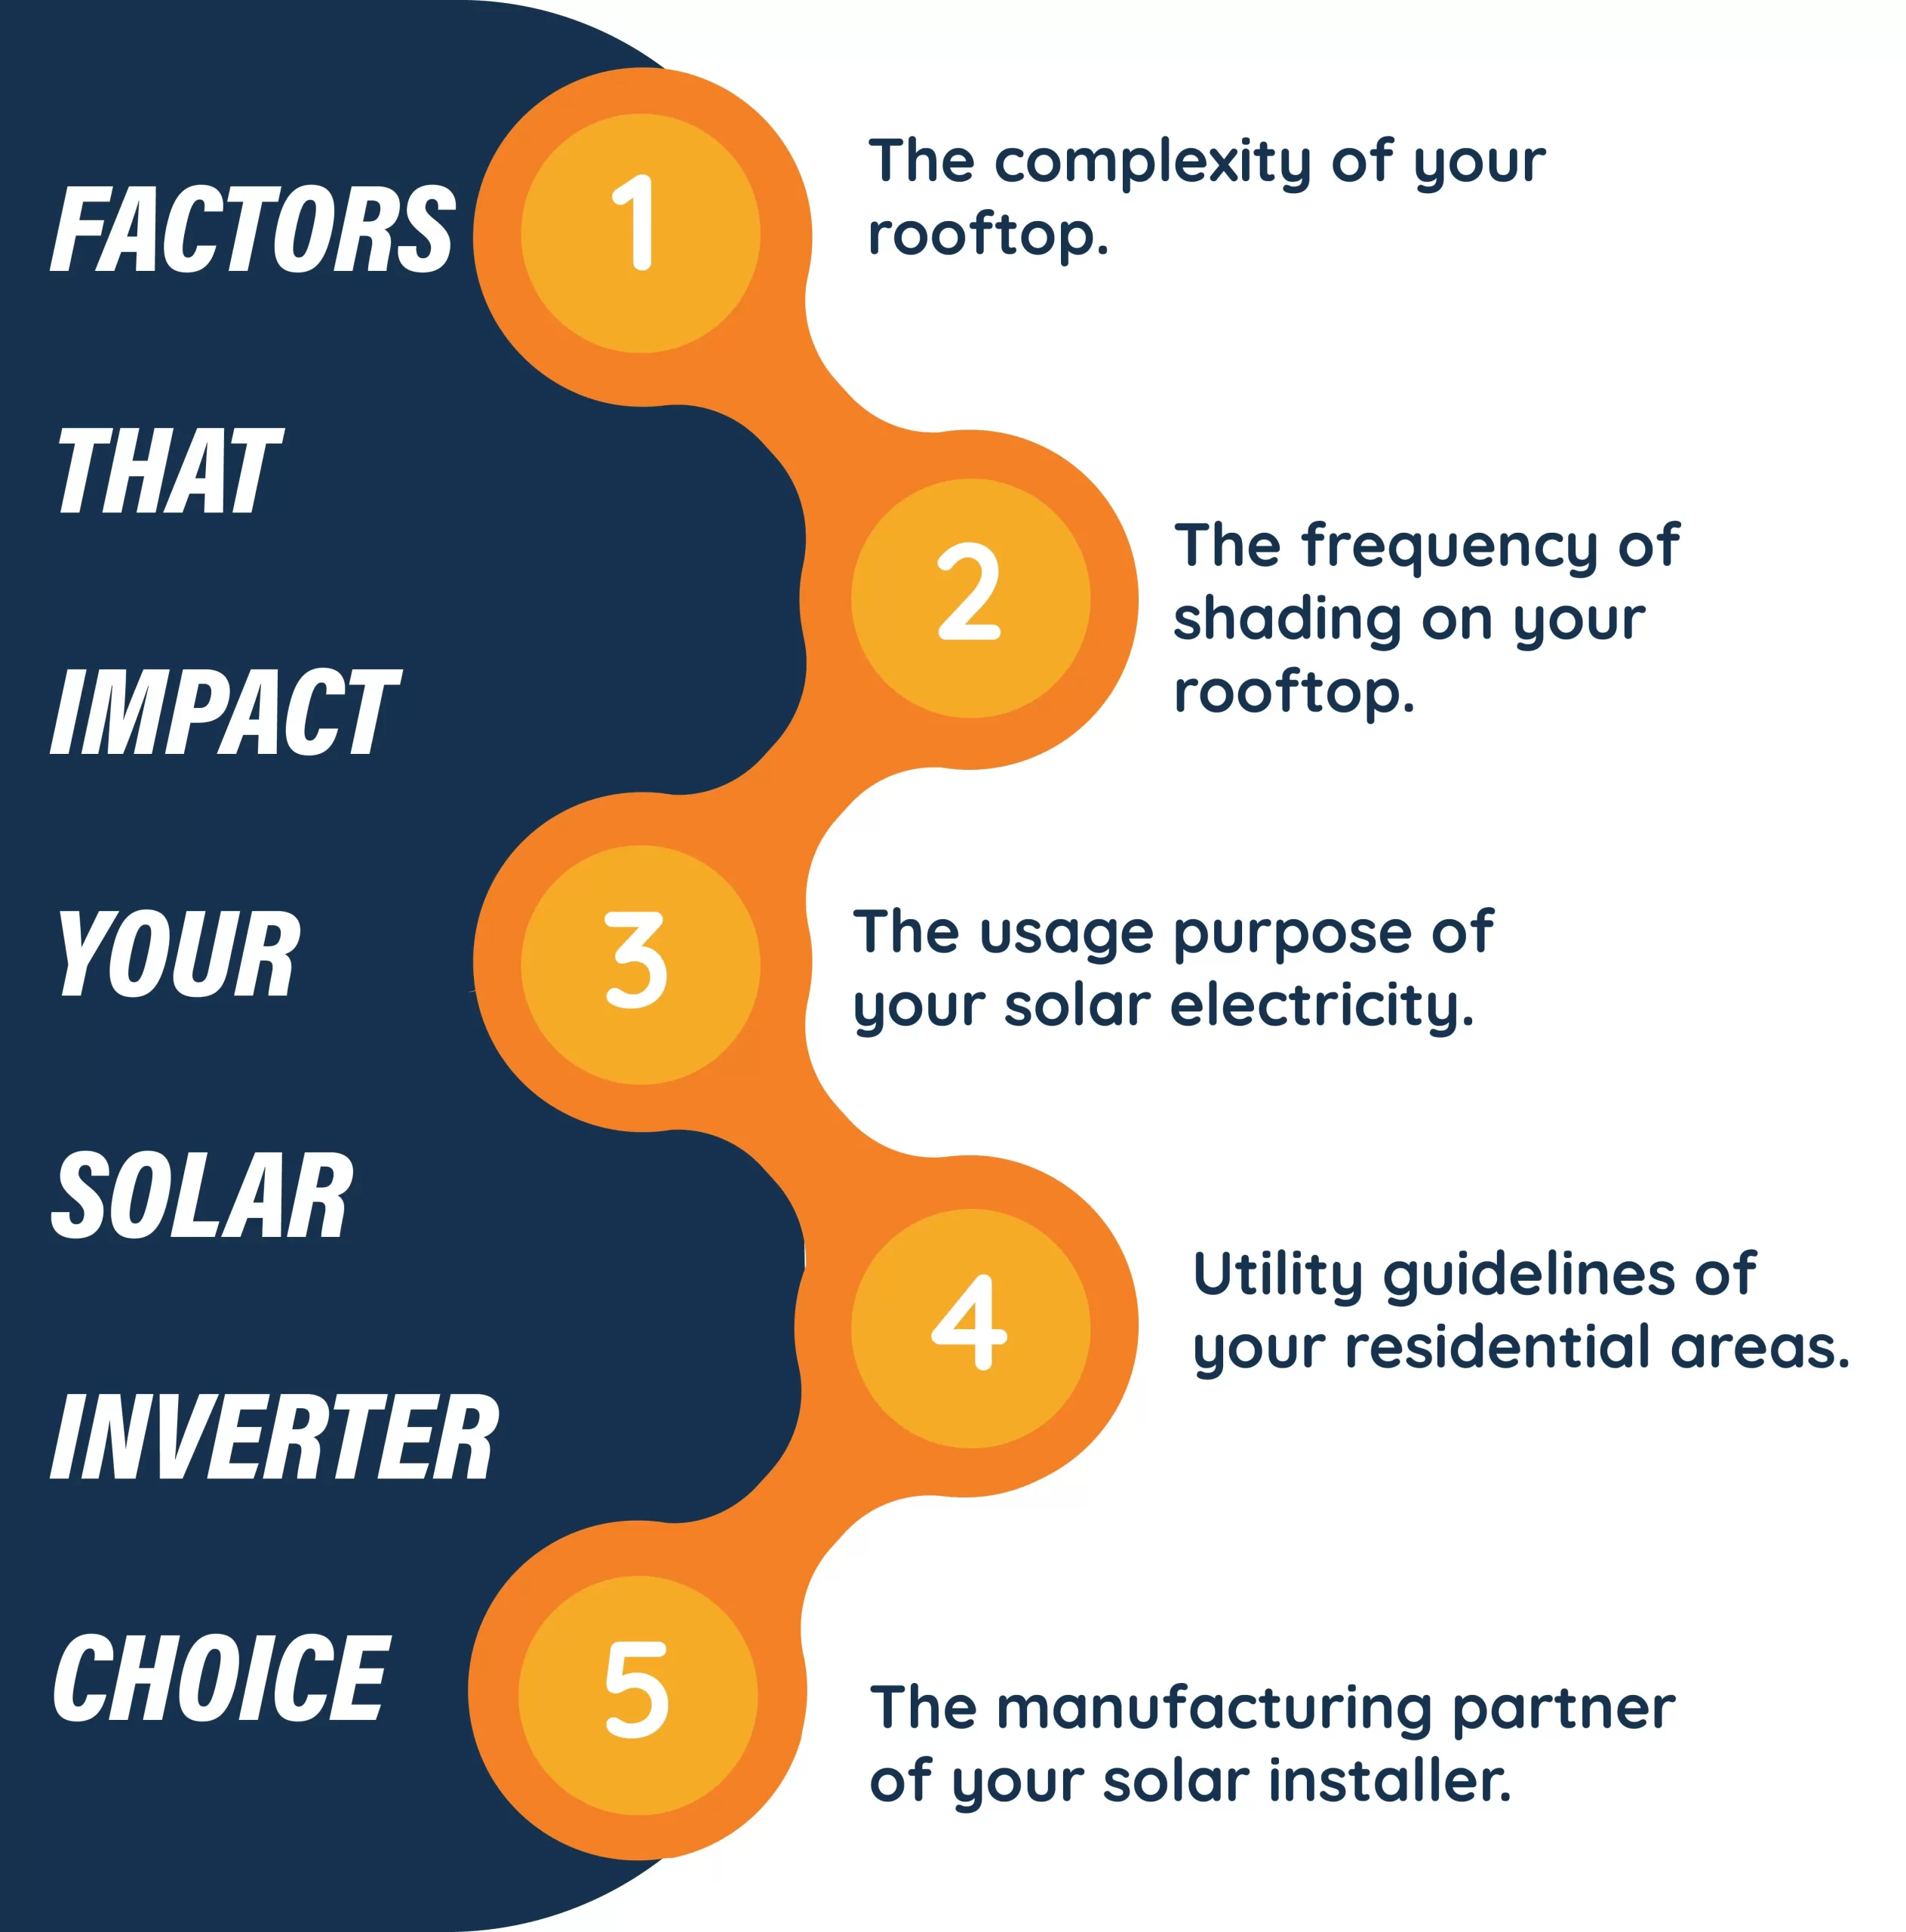 solar inverter choice